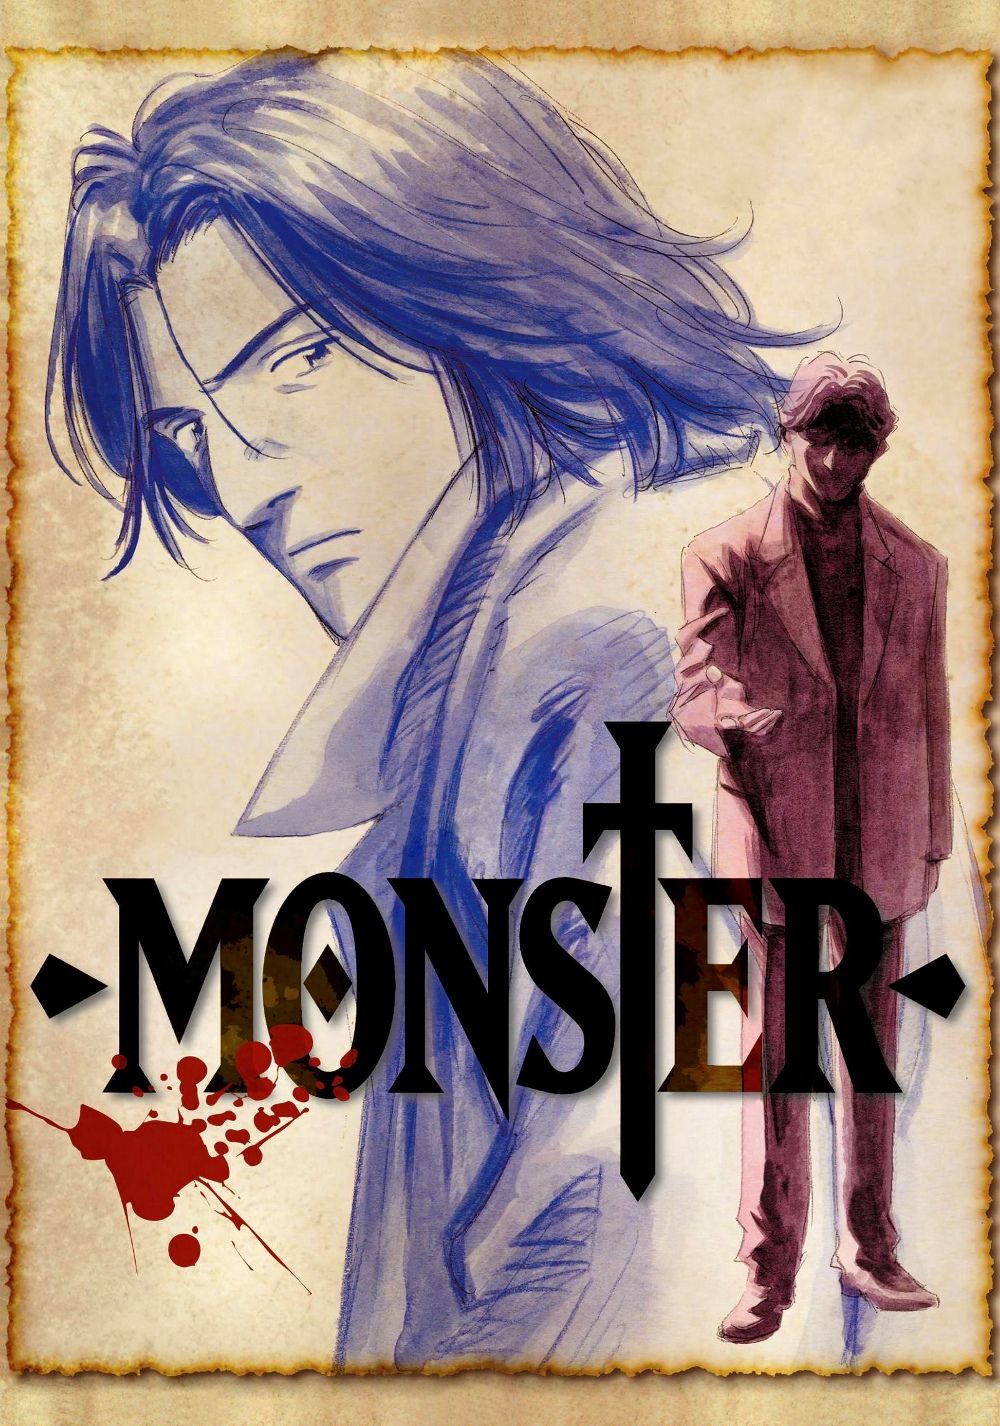 monster-best-anime-series - Pop Culture, Entertainment, Humor, Travel & More